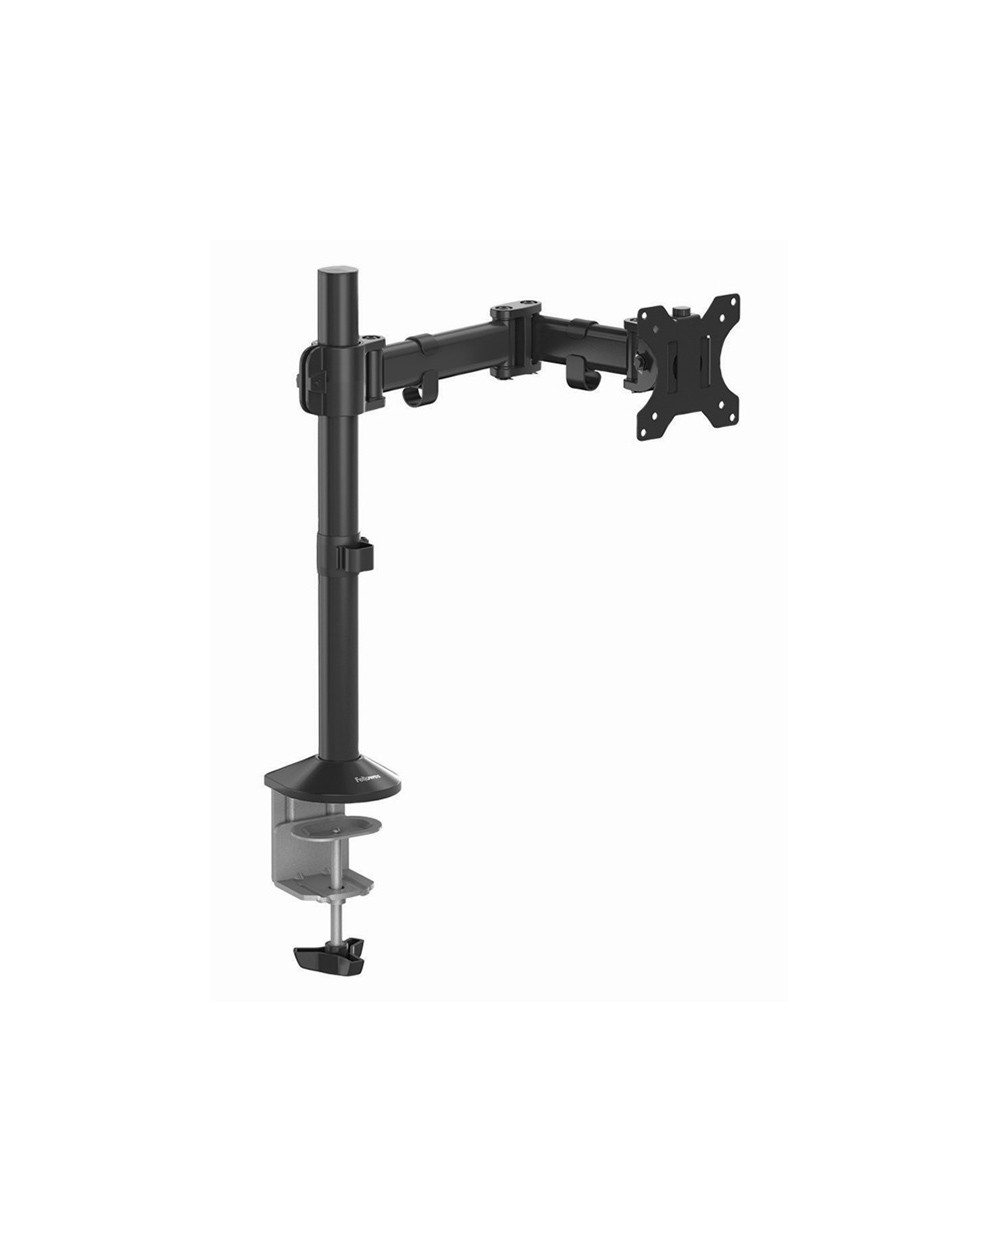 Brazo para monitor fellowes reflex ajustabel en altura hasta 45 cm normativa vesa hasta 8 kg